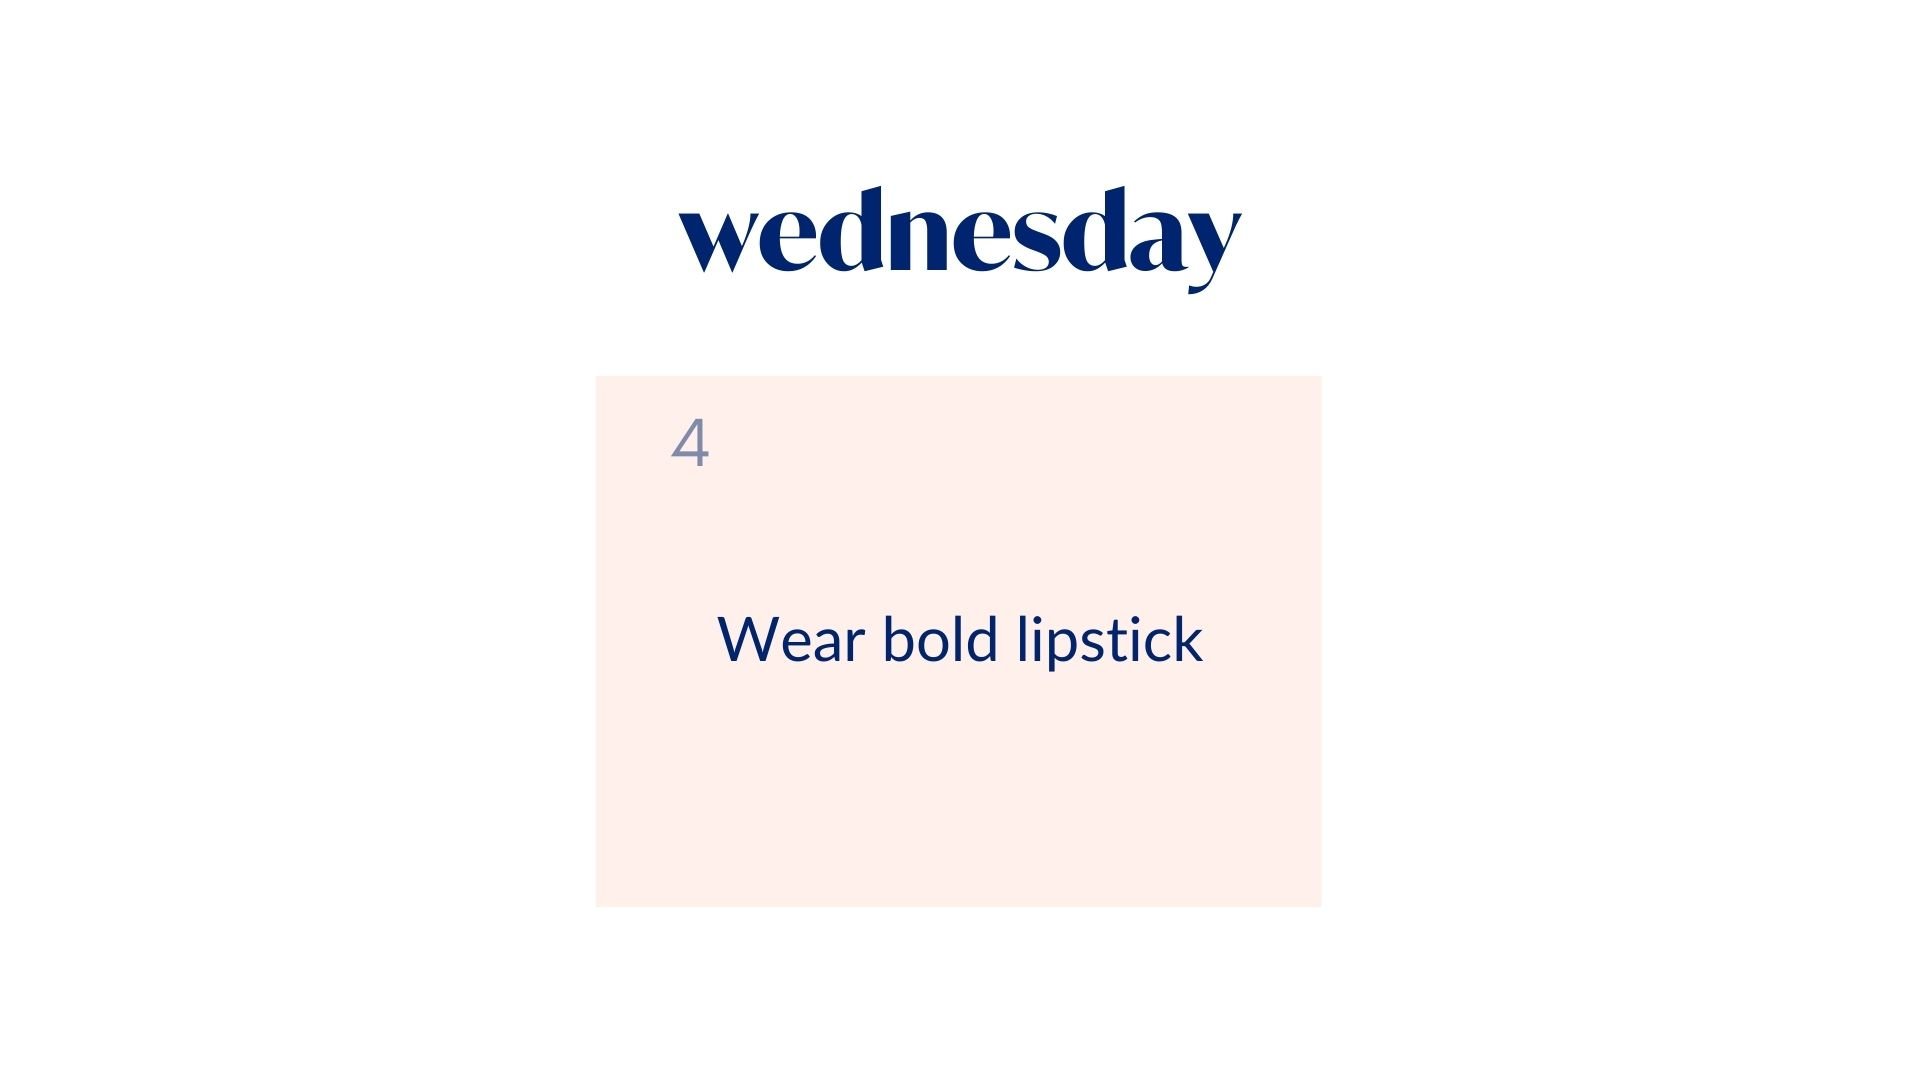 Day 4: Wear bold lipstick